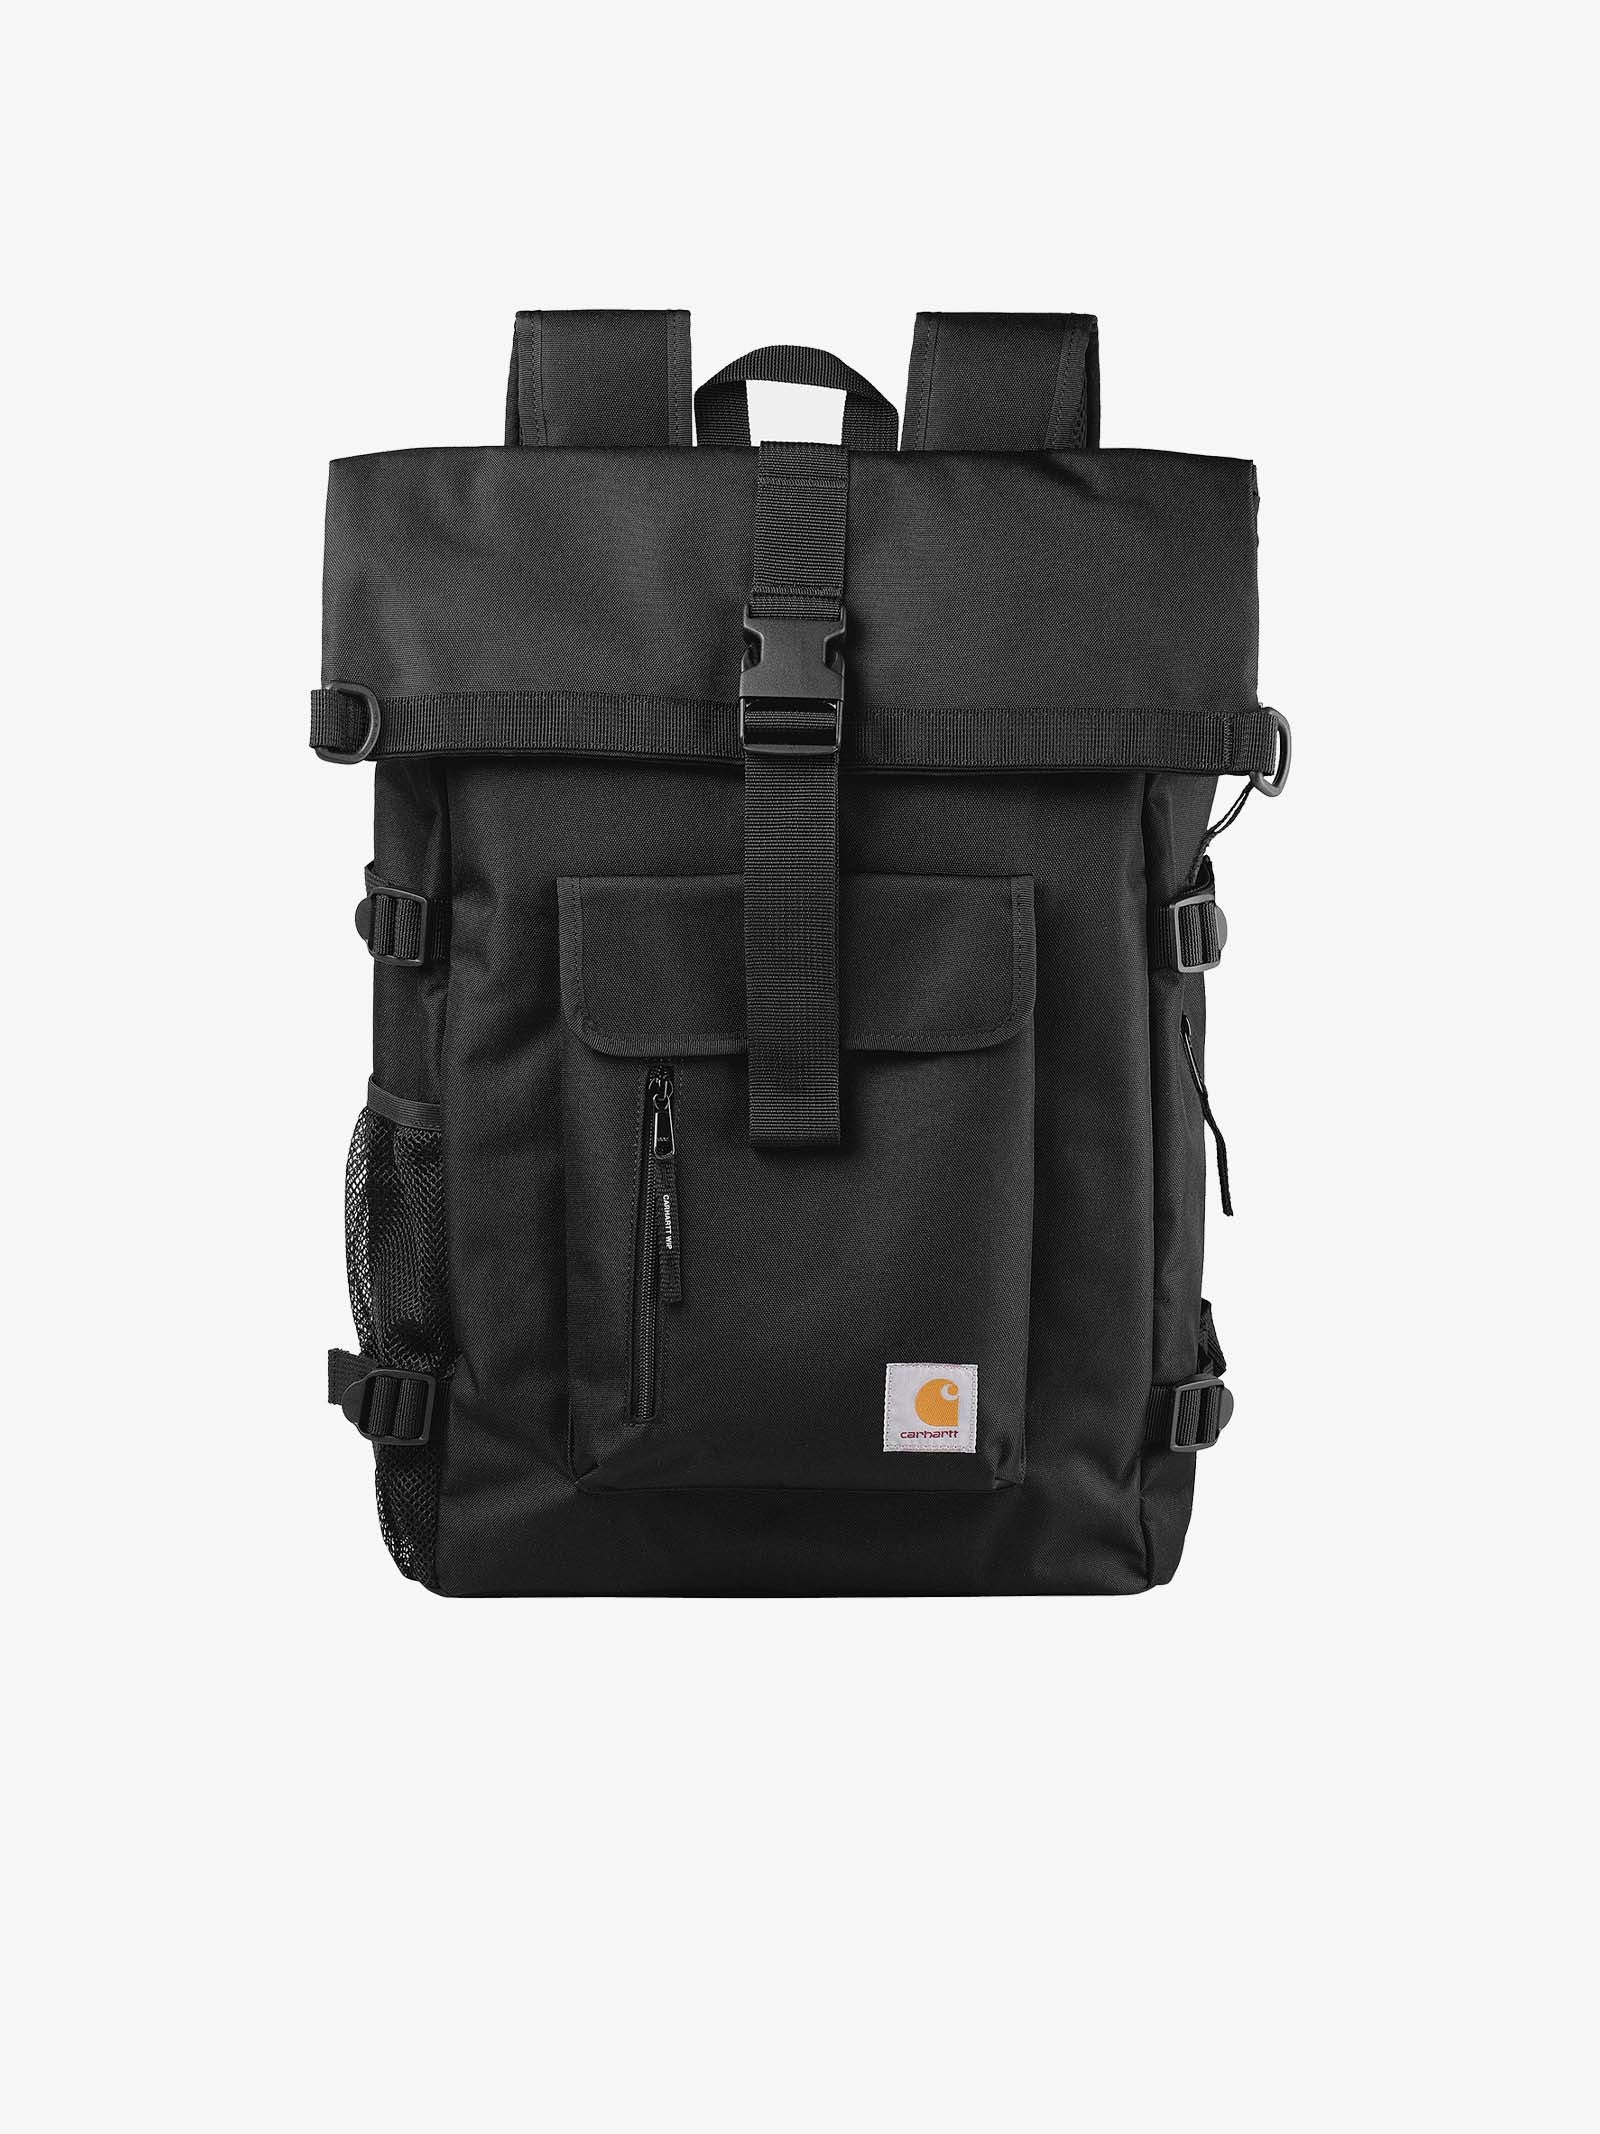 CARHARTT WIP Philis I031575_89_XX backpack in black canvas